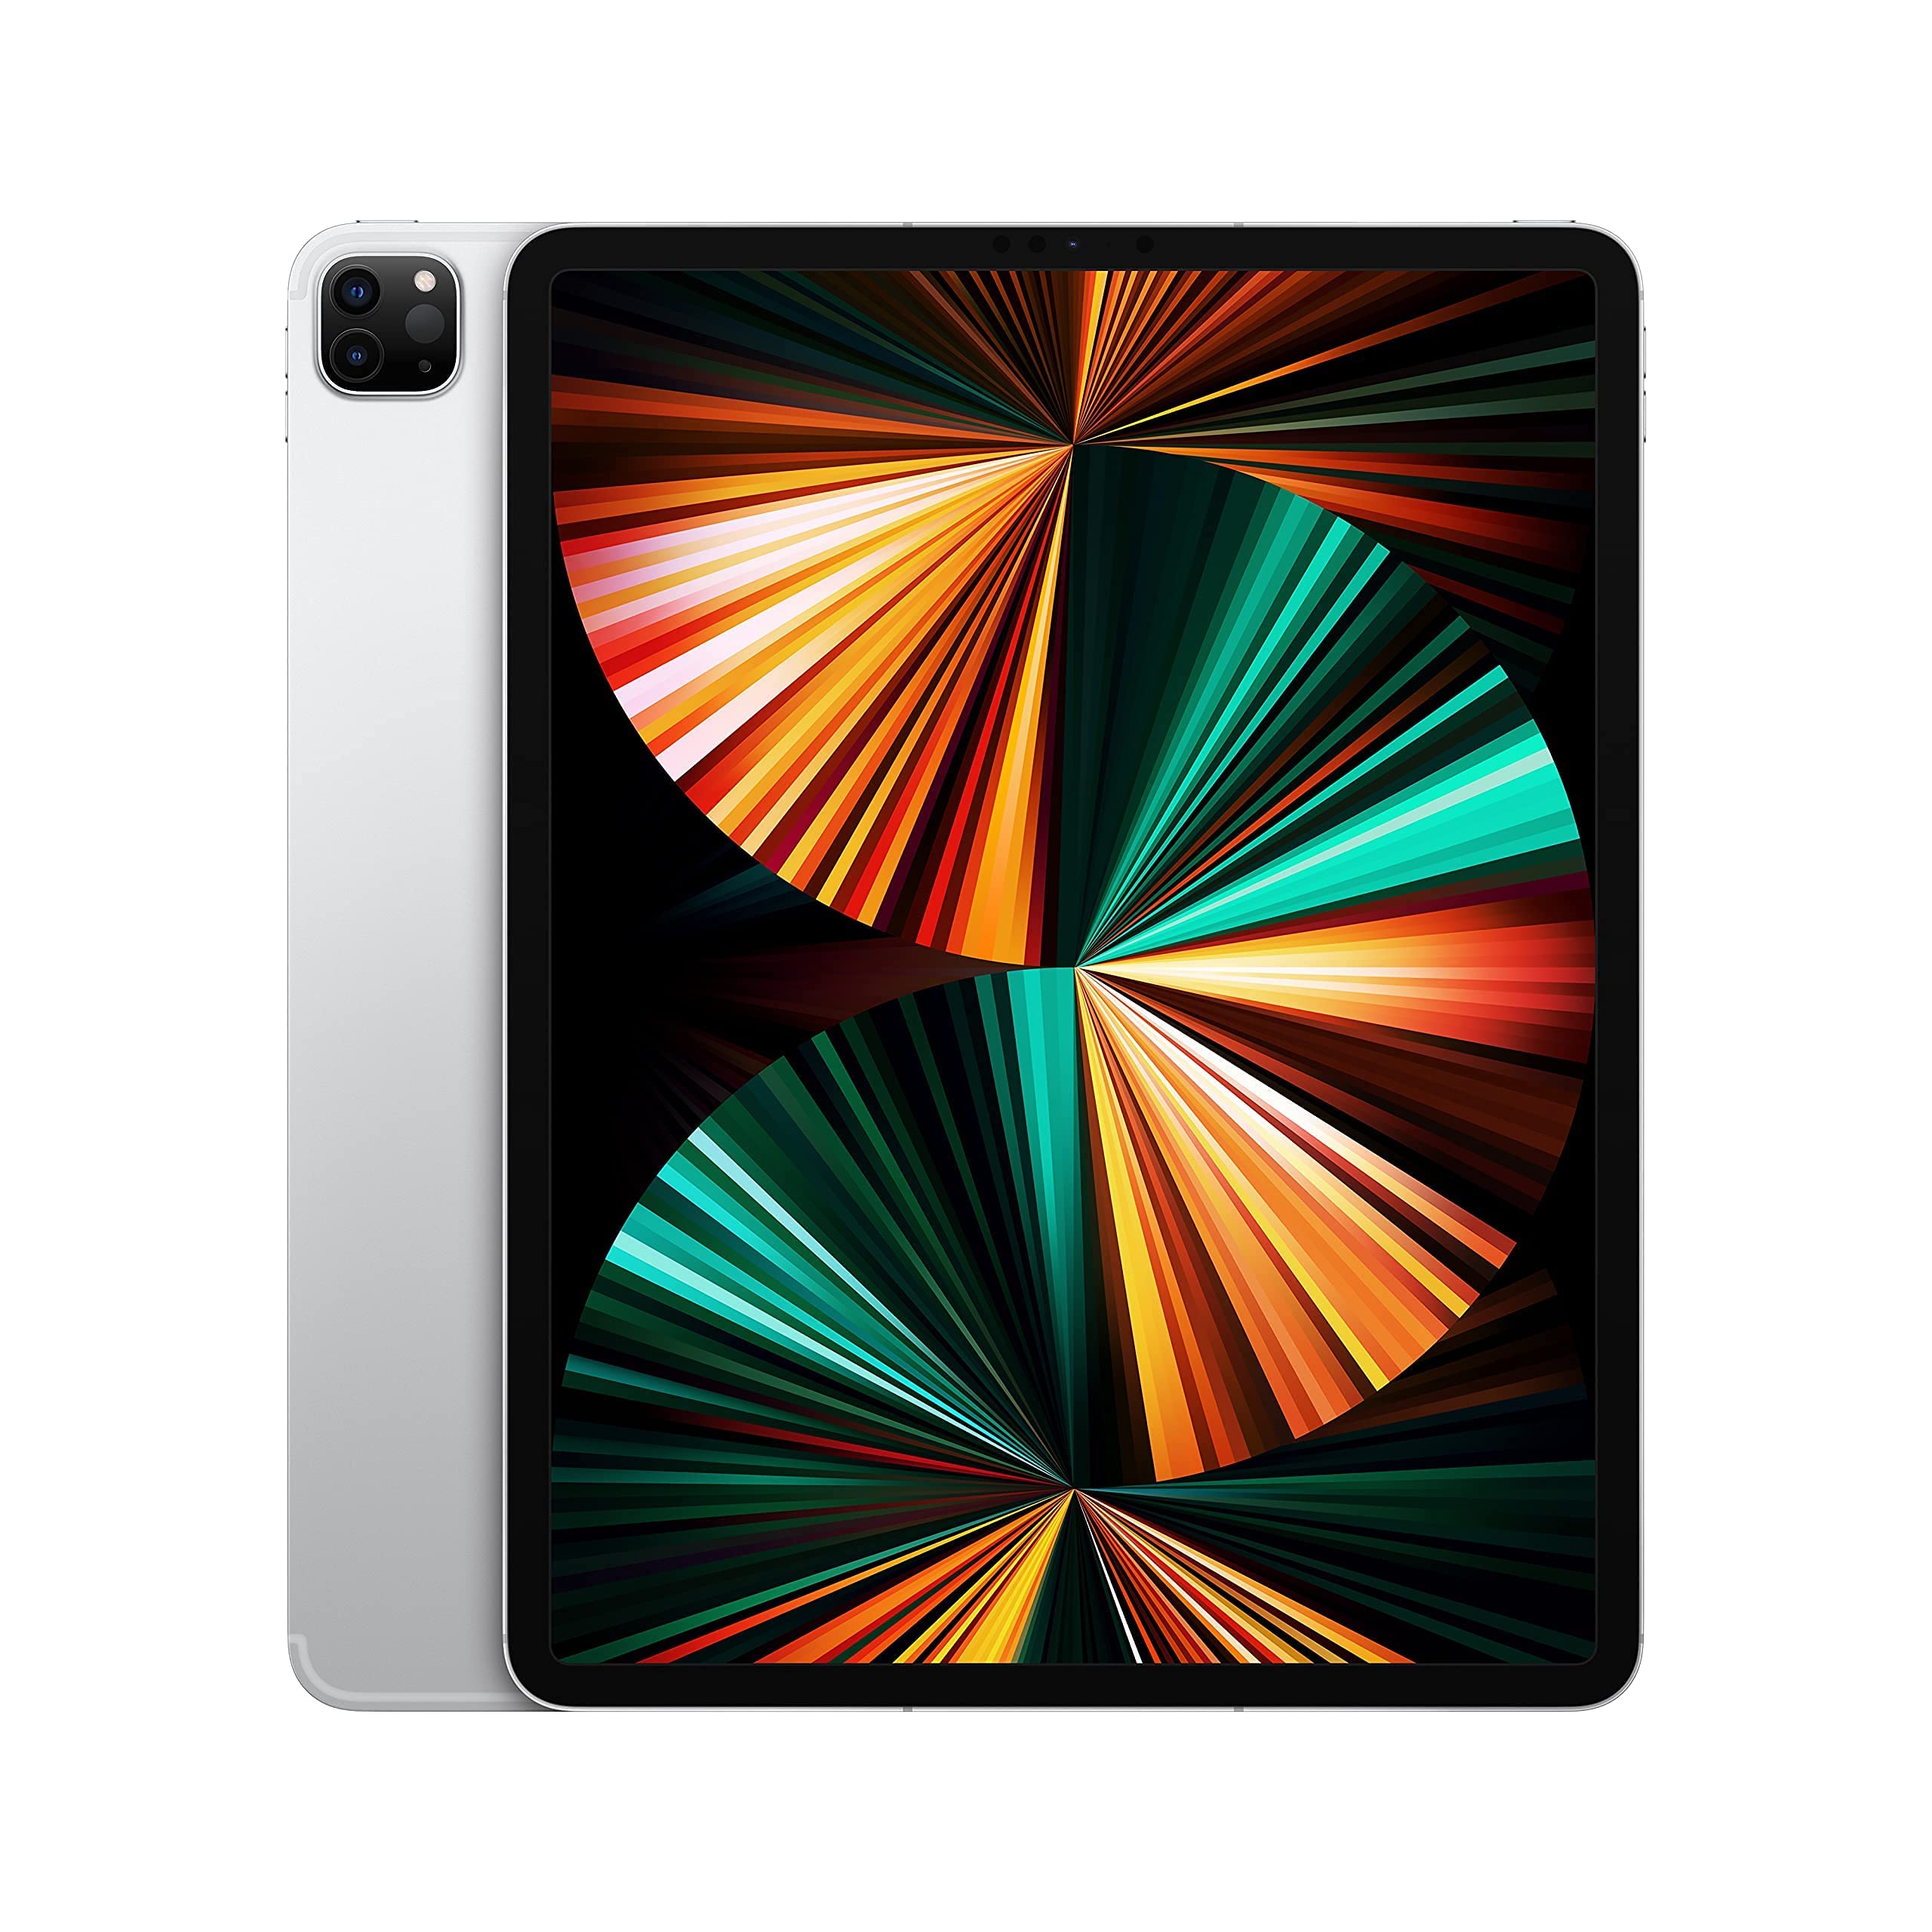 2021 Apple iPad Pro (12.9-inch, Wi?Fi + Cellular, 512GB) - Silver (Renewed)